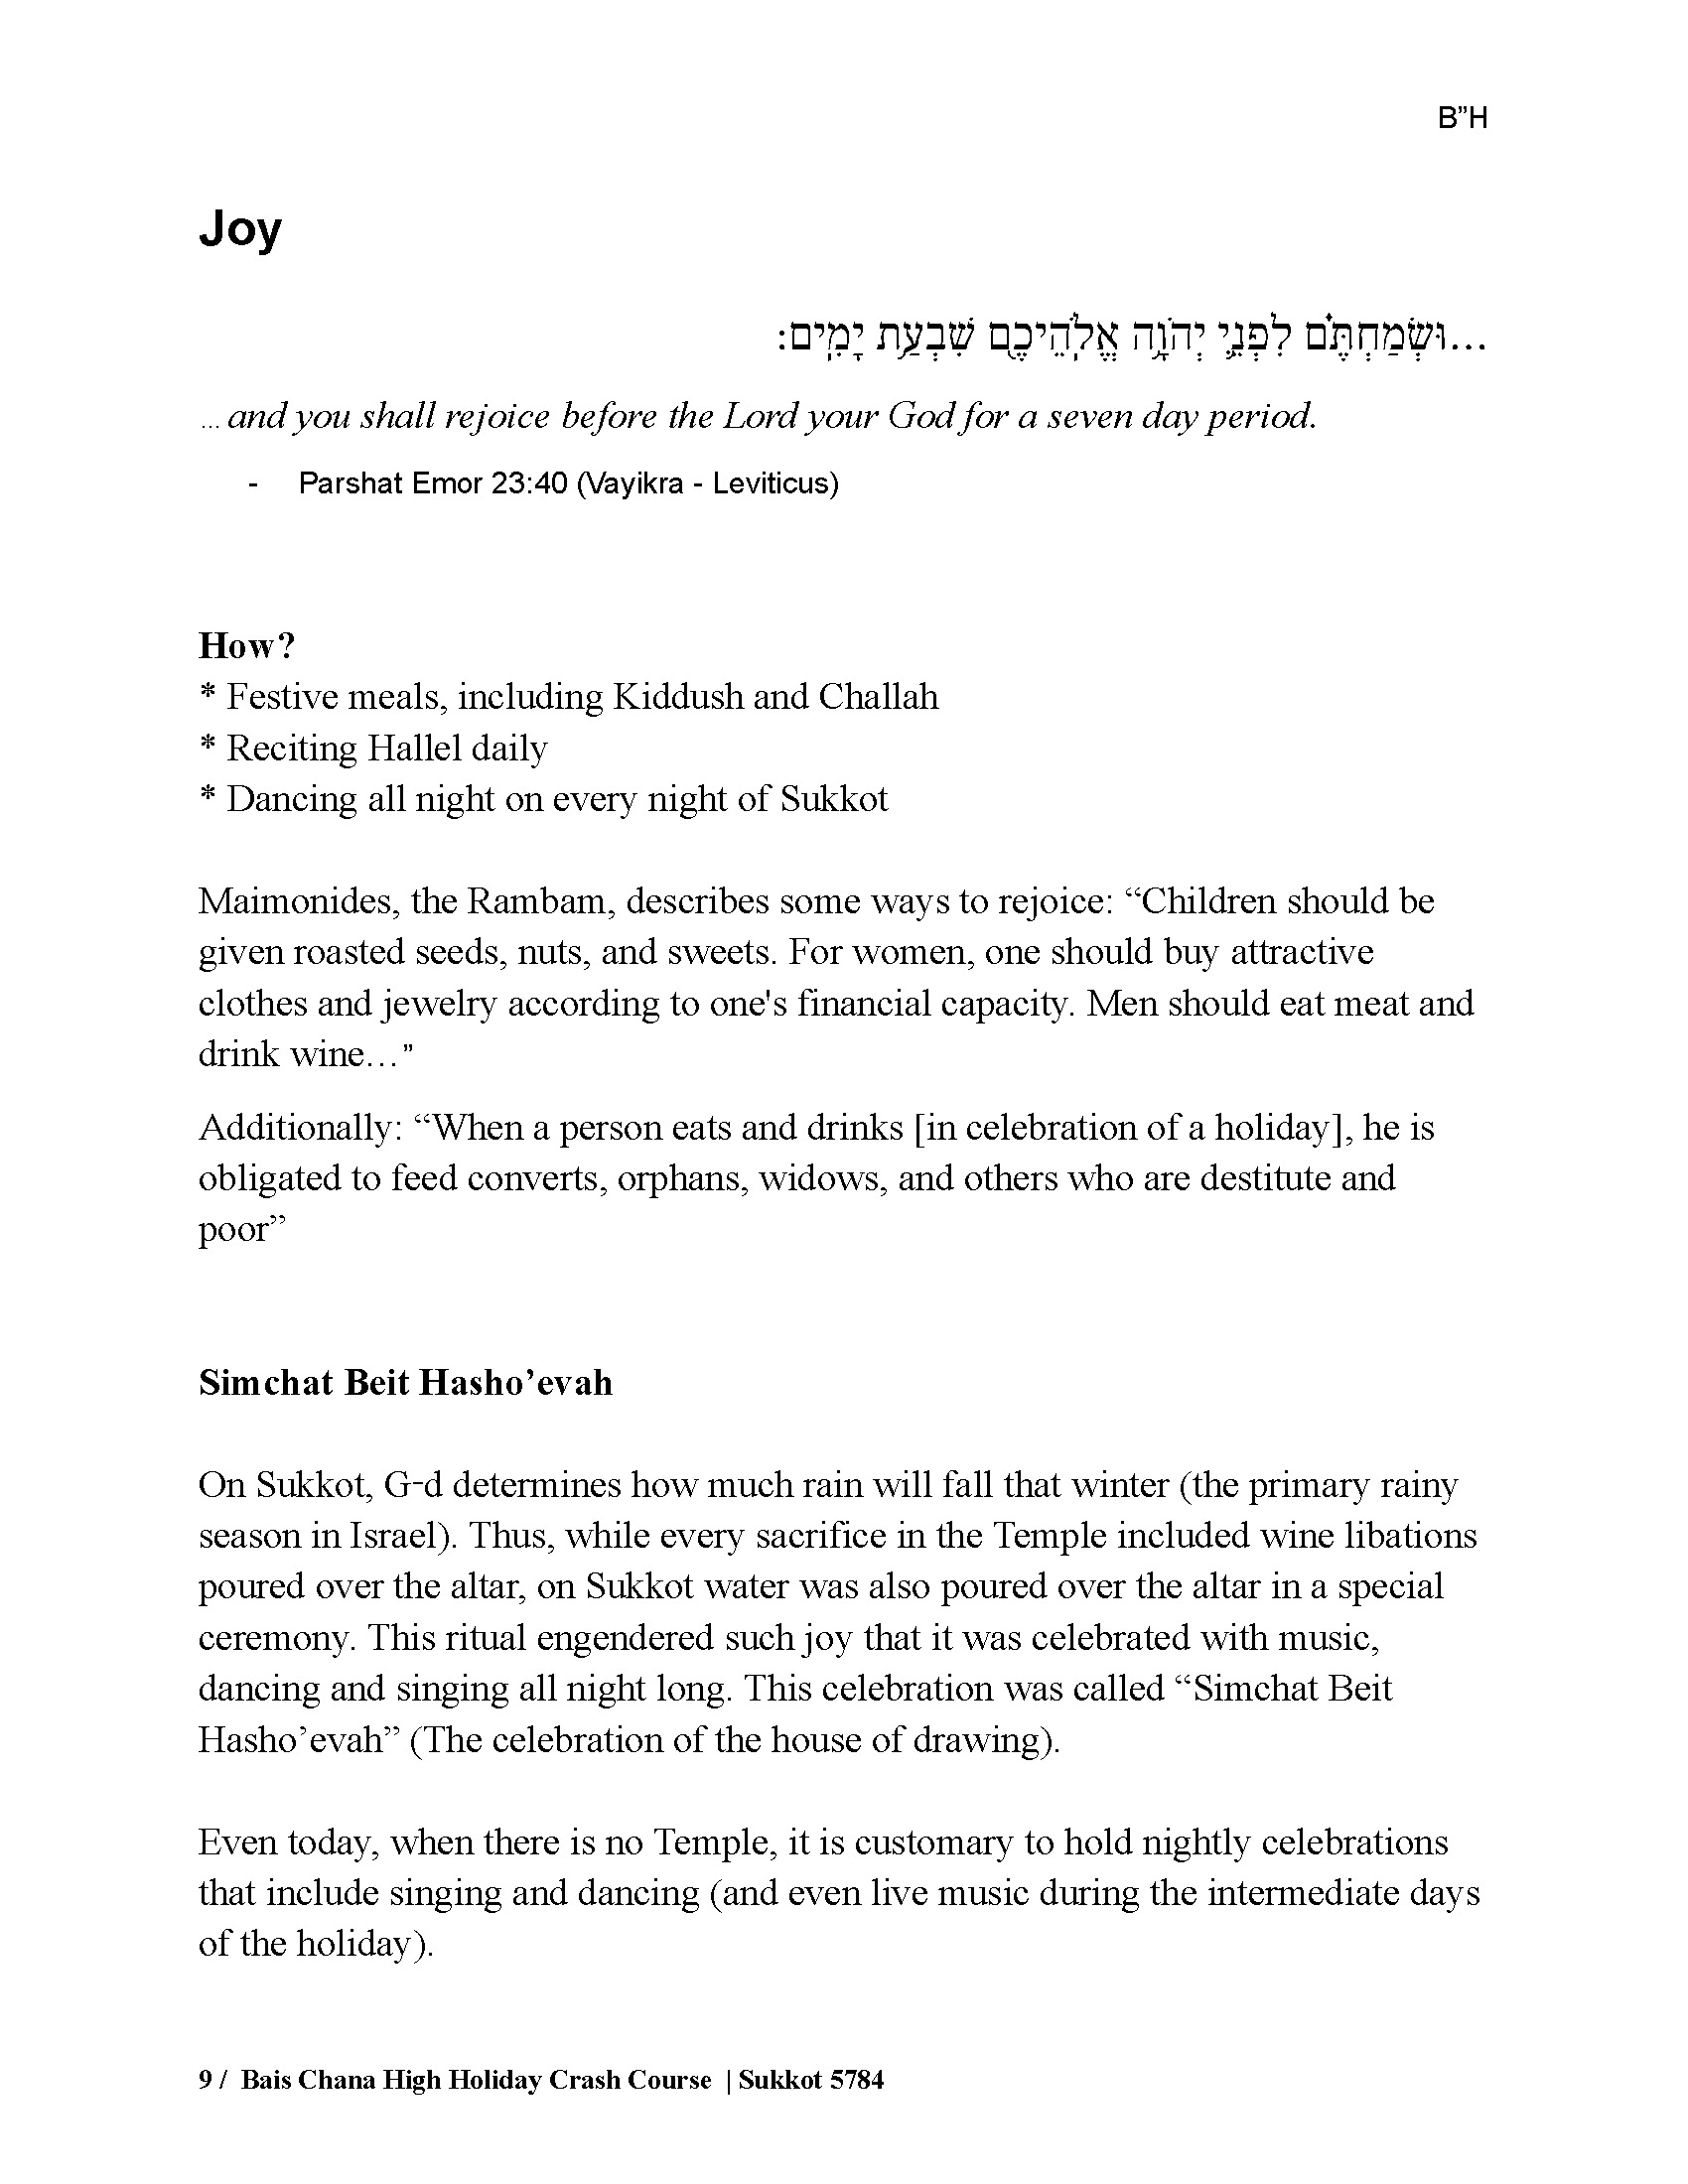 High Holidays 5784 - Sukkot crash course_Page_09